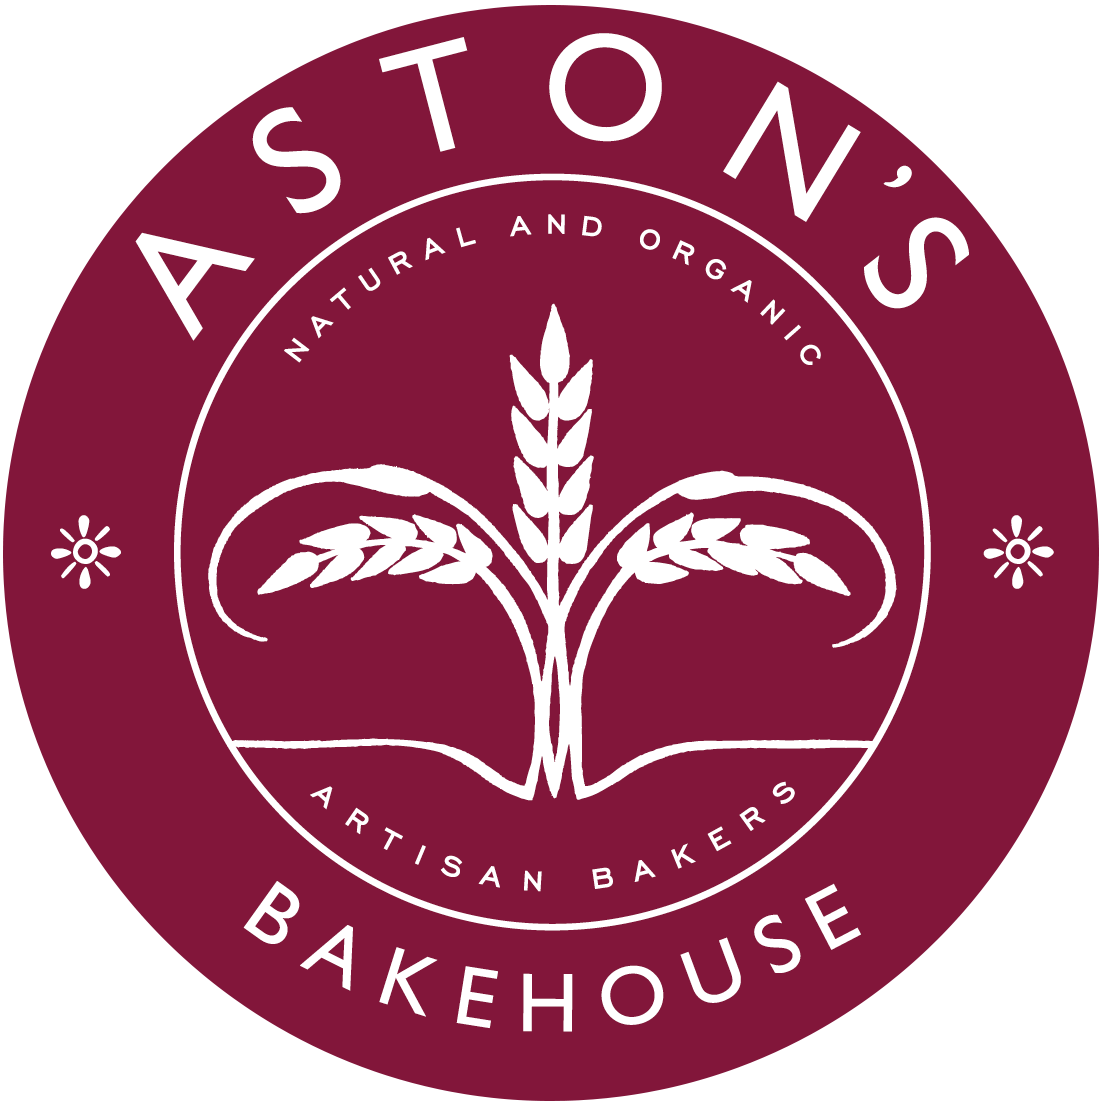 Astons Bakehouse